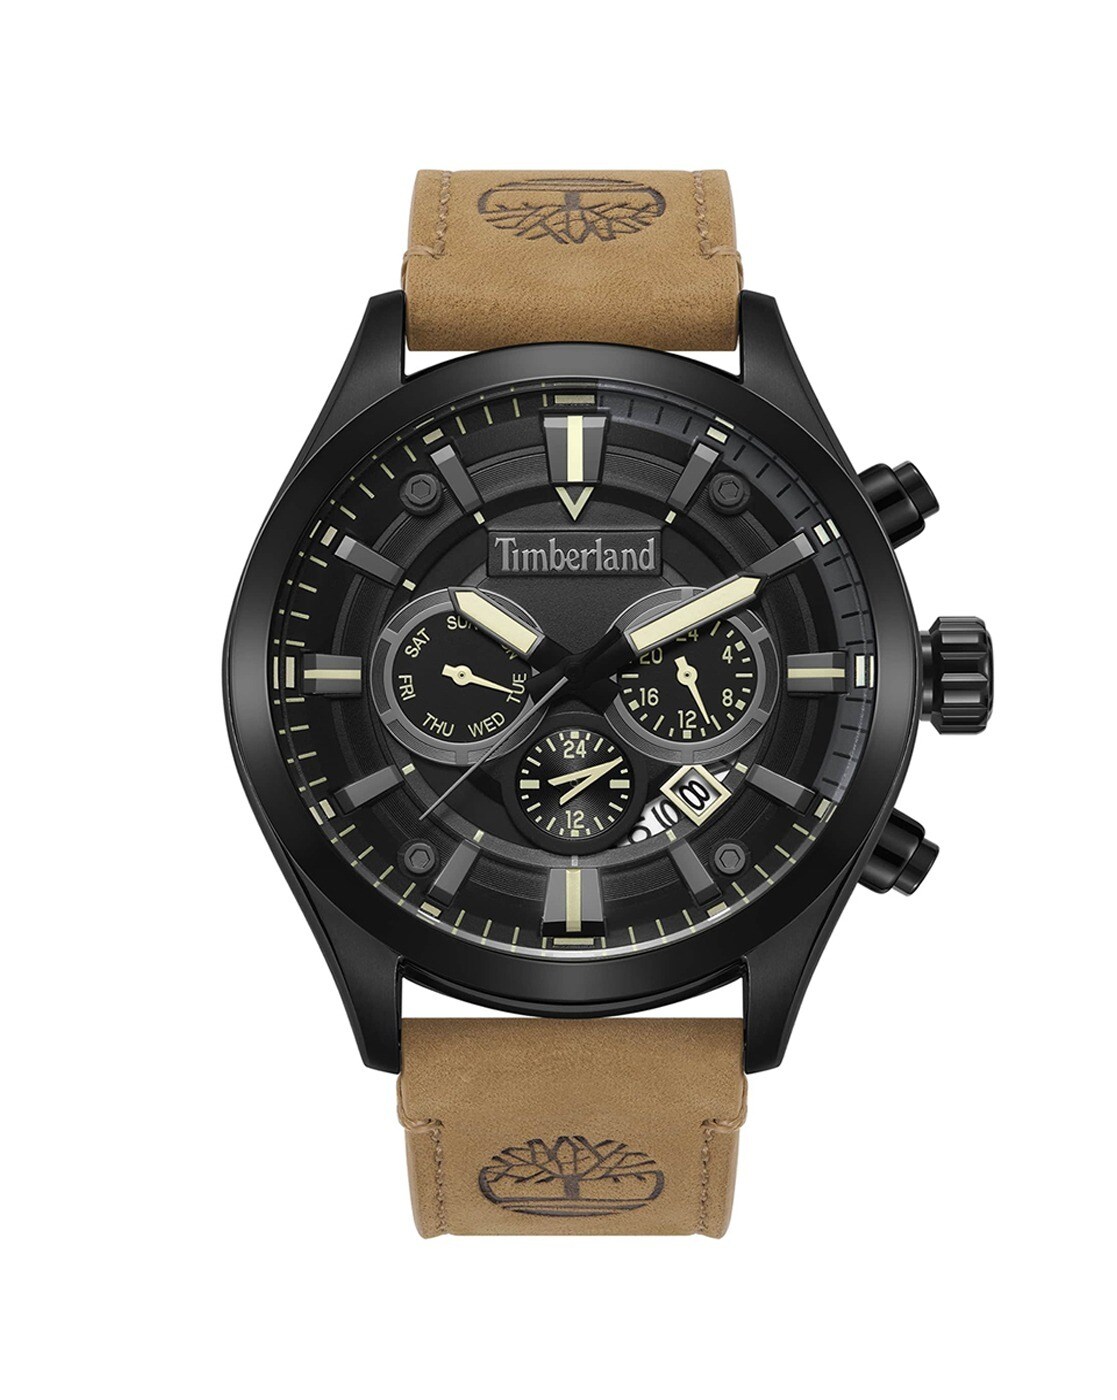 TIMBERLAND HADLOCK Men's Multifunctional Watch 46 mm Leather Strap  TDWGF2200703 | eBay